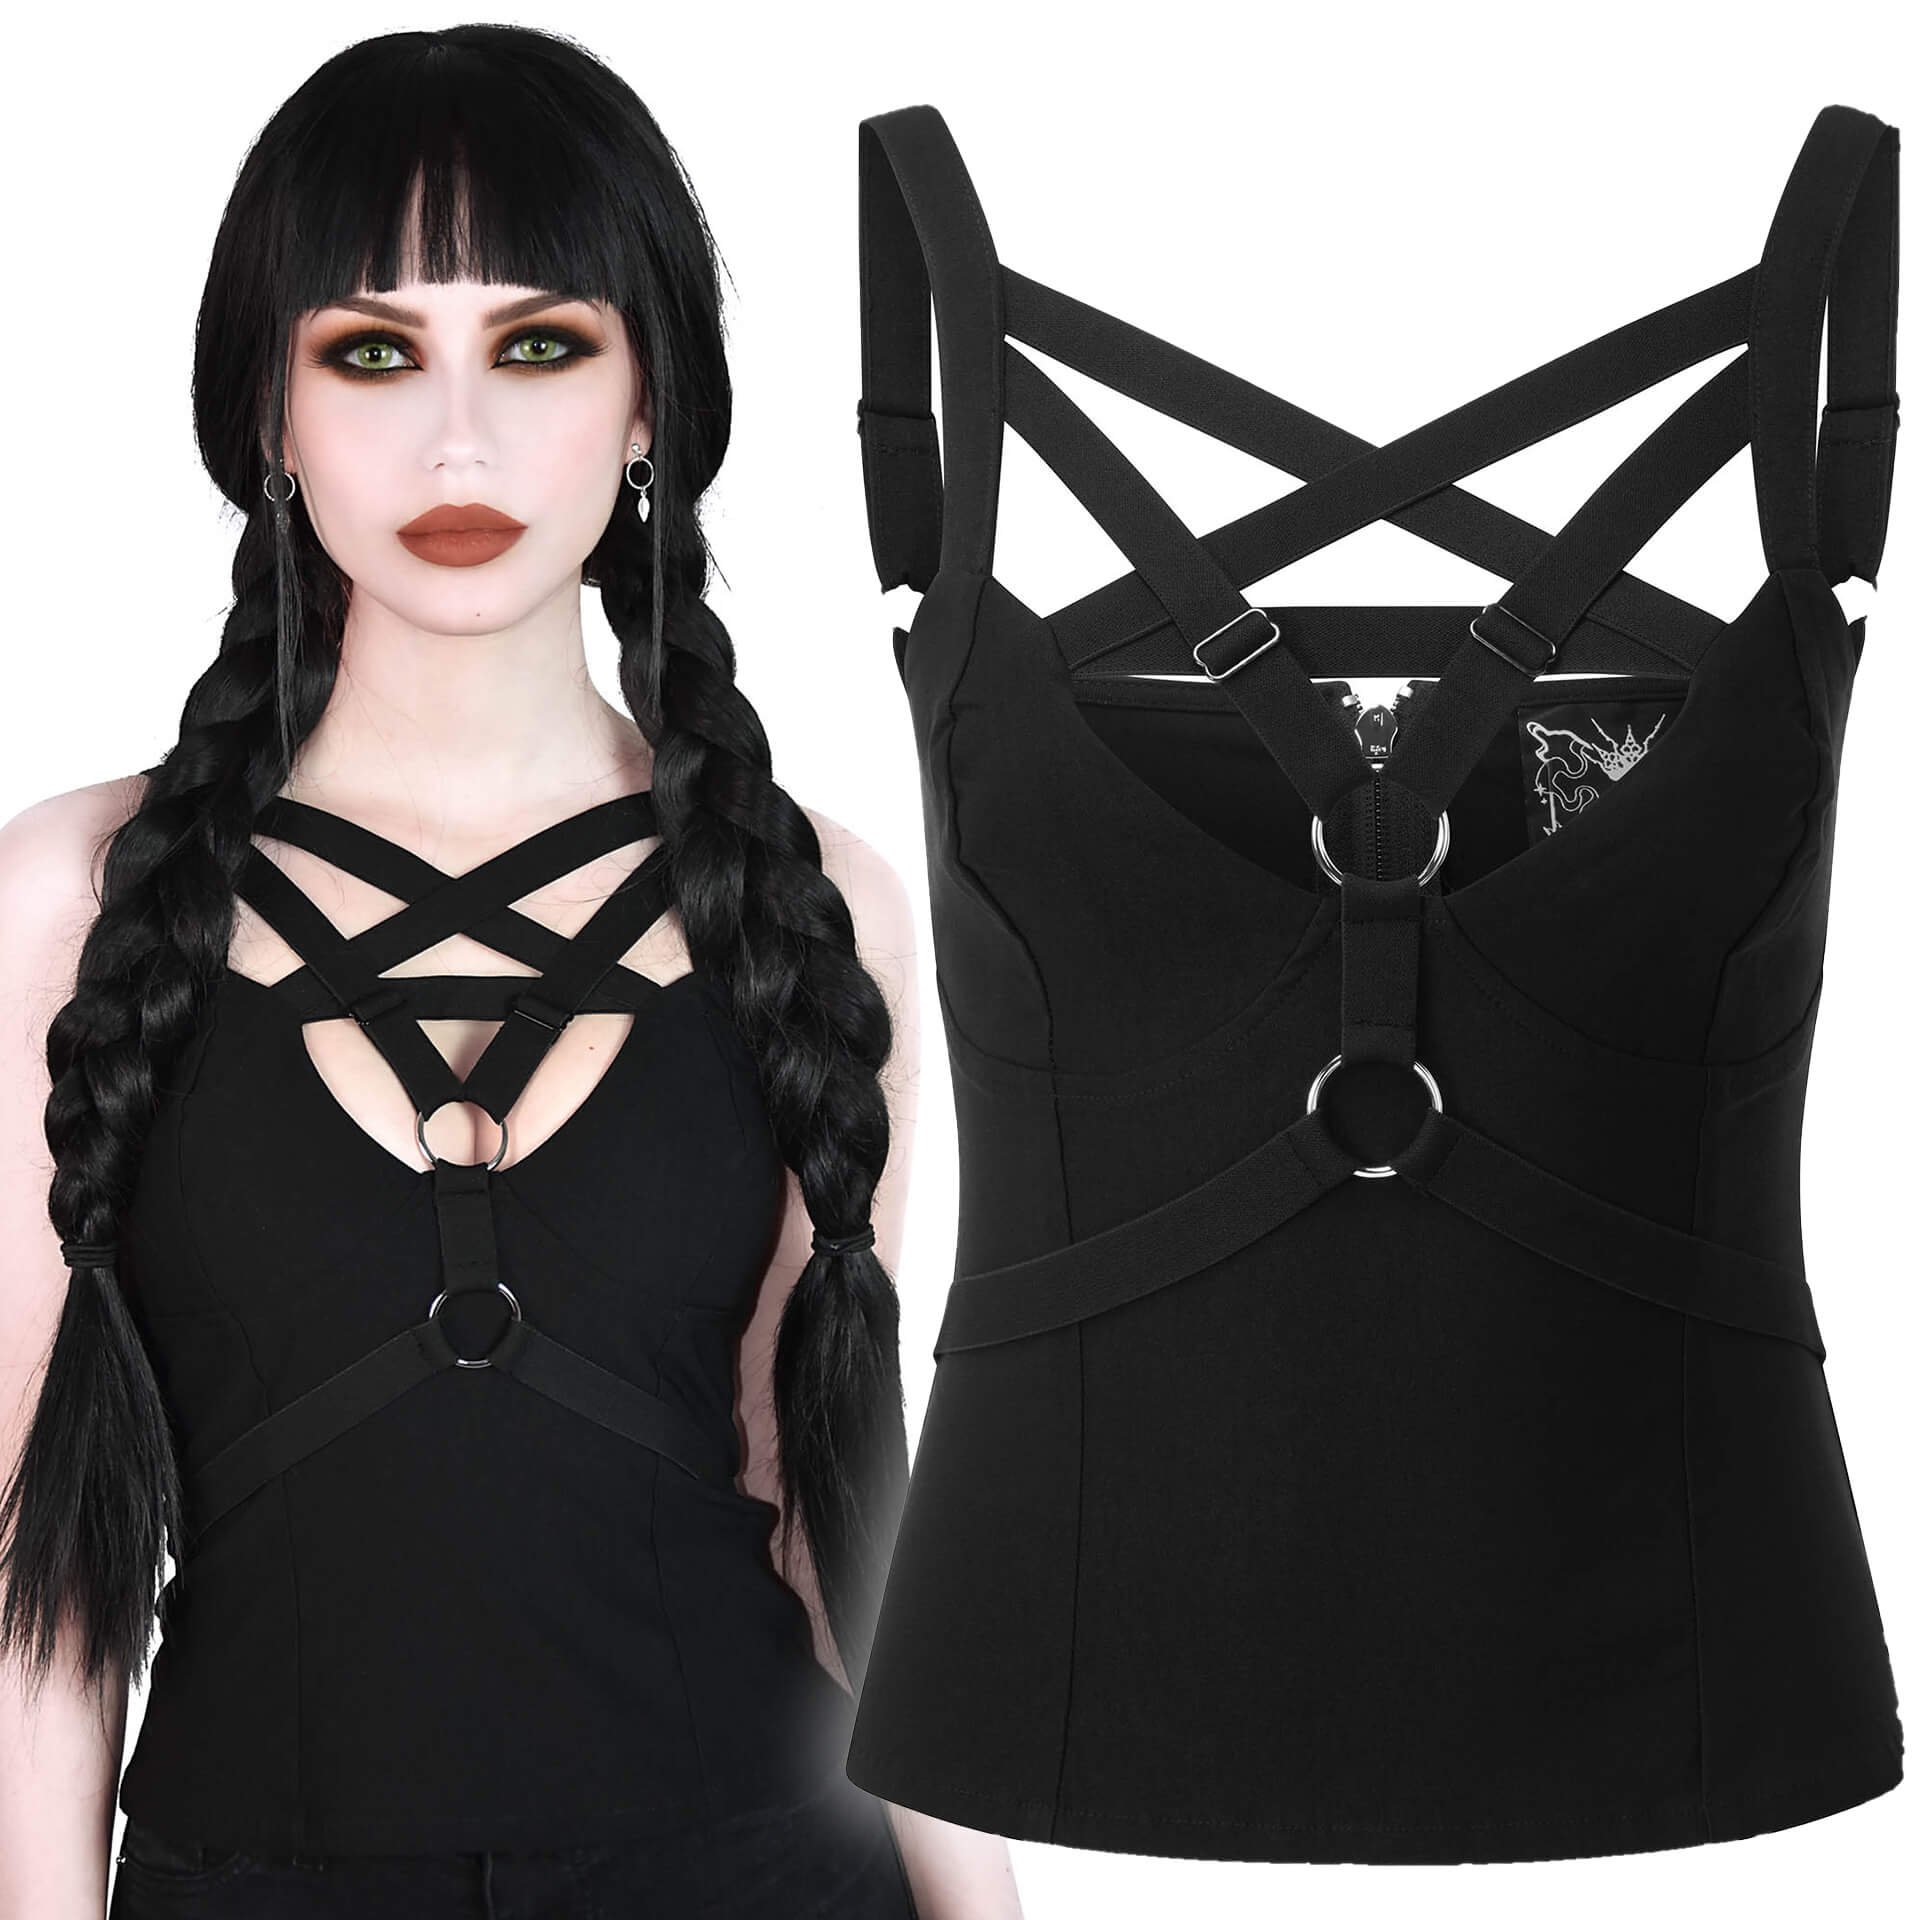 Black, Gothic, sleeveless top with harness details. - Killstar - KSRA001686